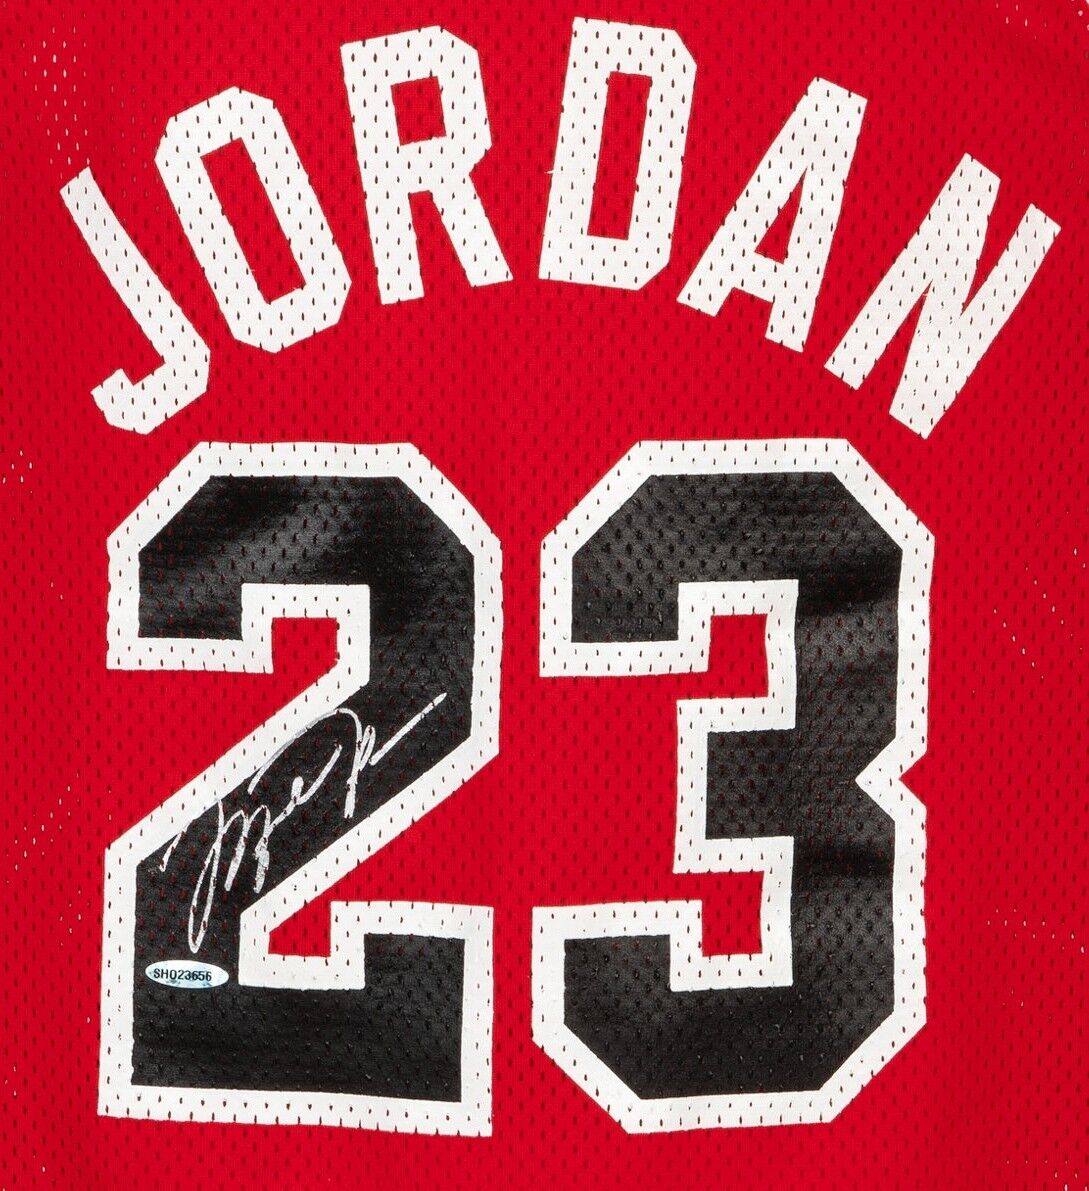 Michael Jordan Signed Autograph 1986 Chicago Bulls Jersey. Auto Upper Deck UDA